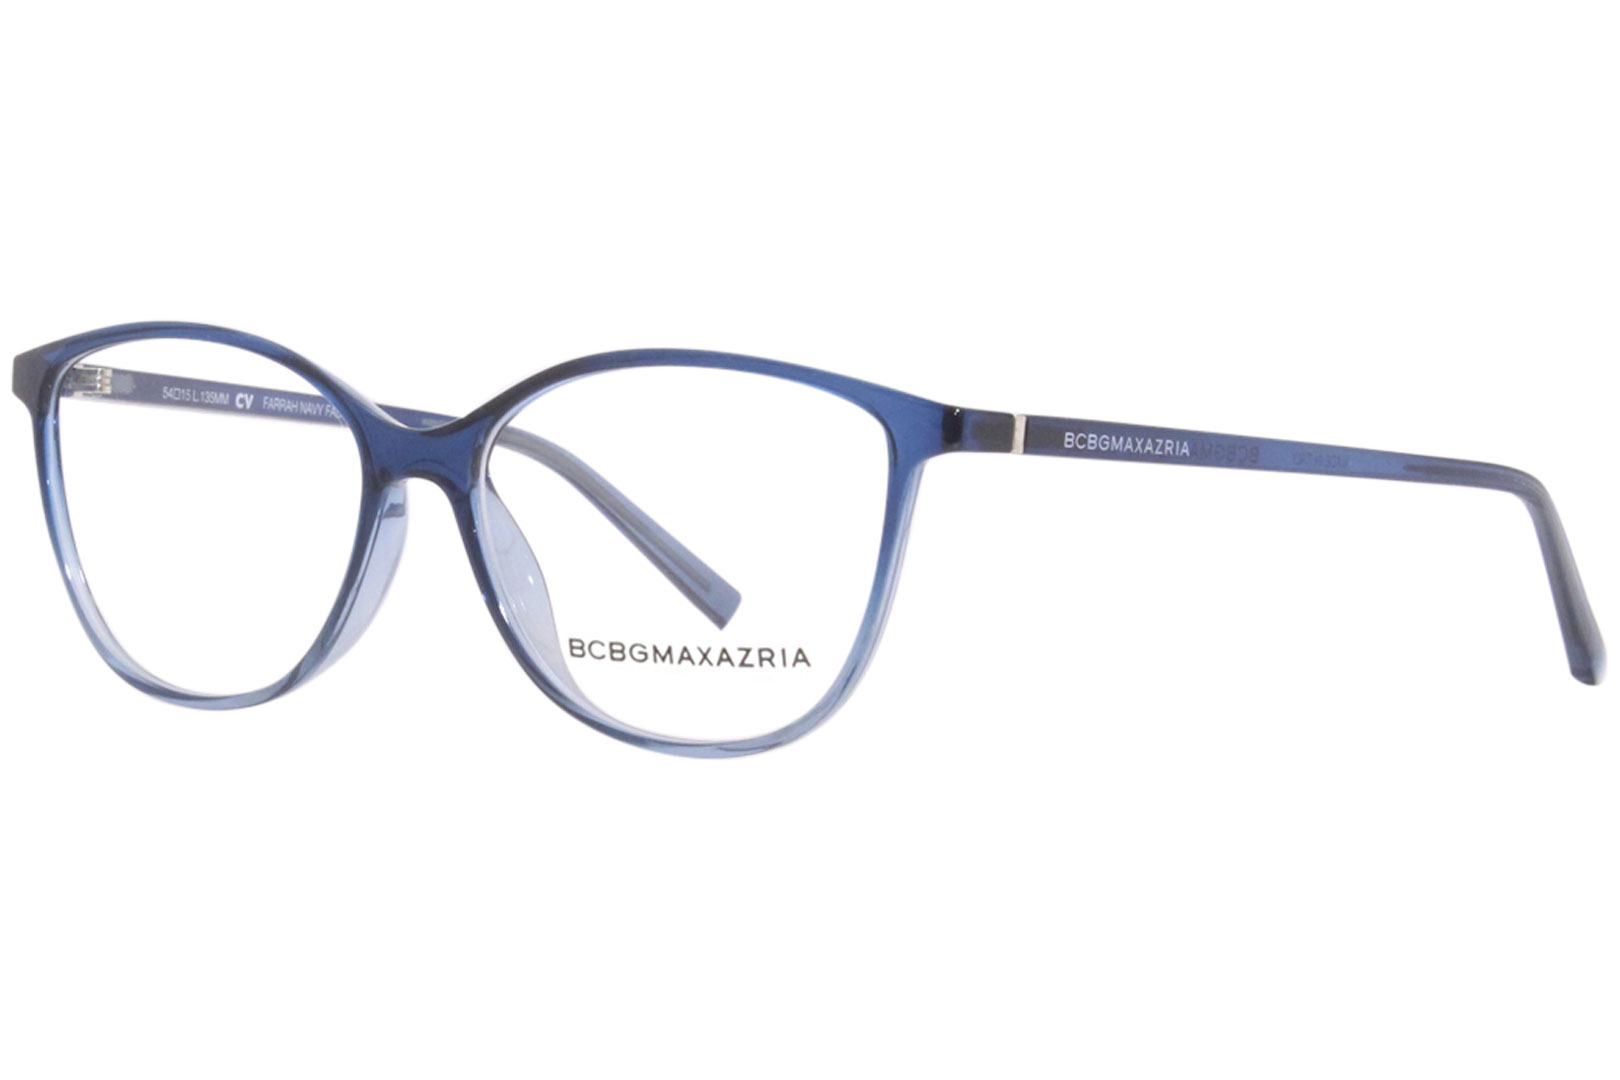 BCBGMaxazria Eyeglasses Frame Women's Farrah Navy Fade 54-15-135mm